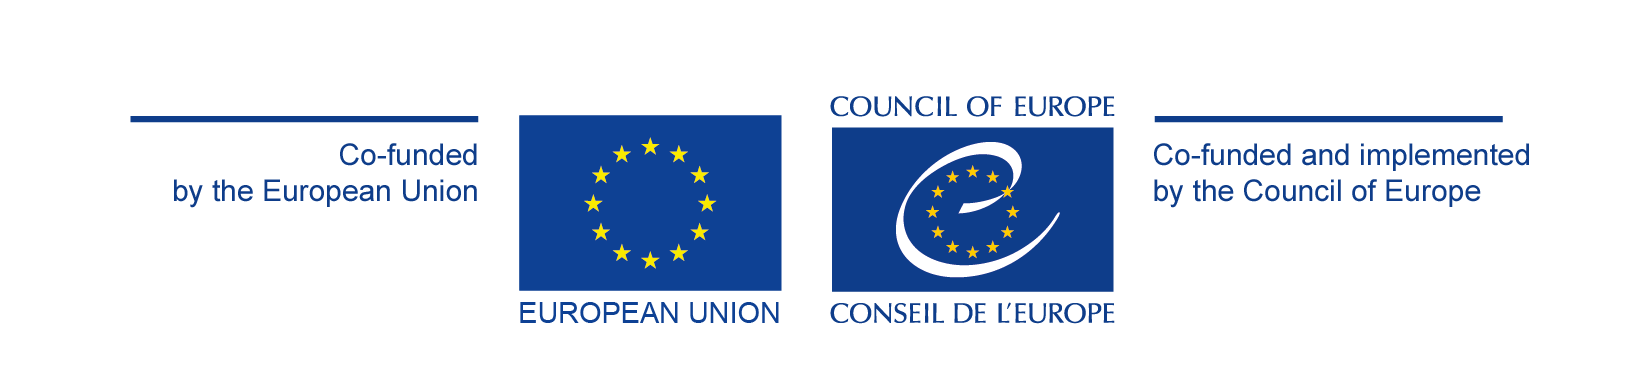 Eu and Council of Europe logos